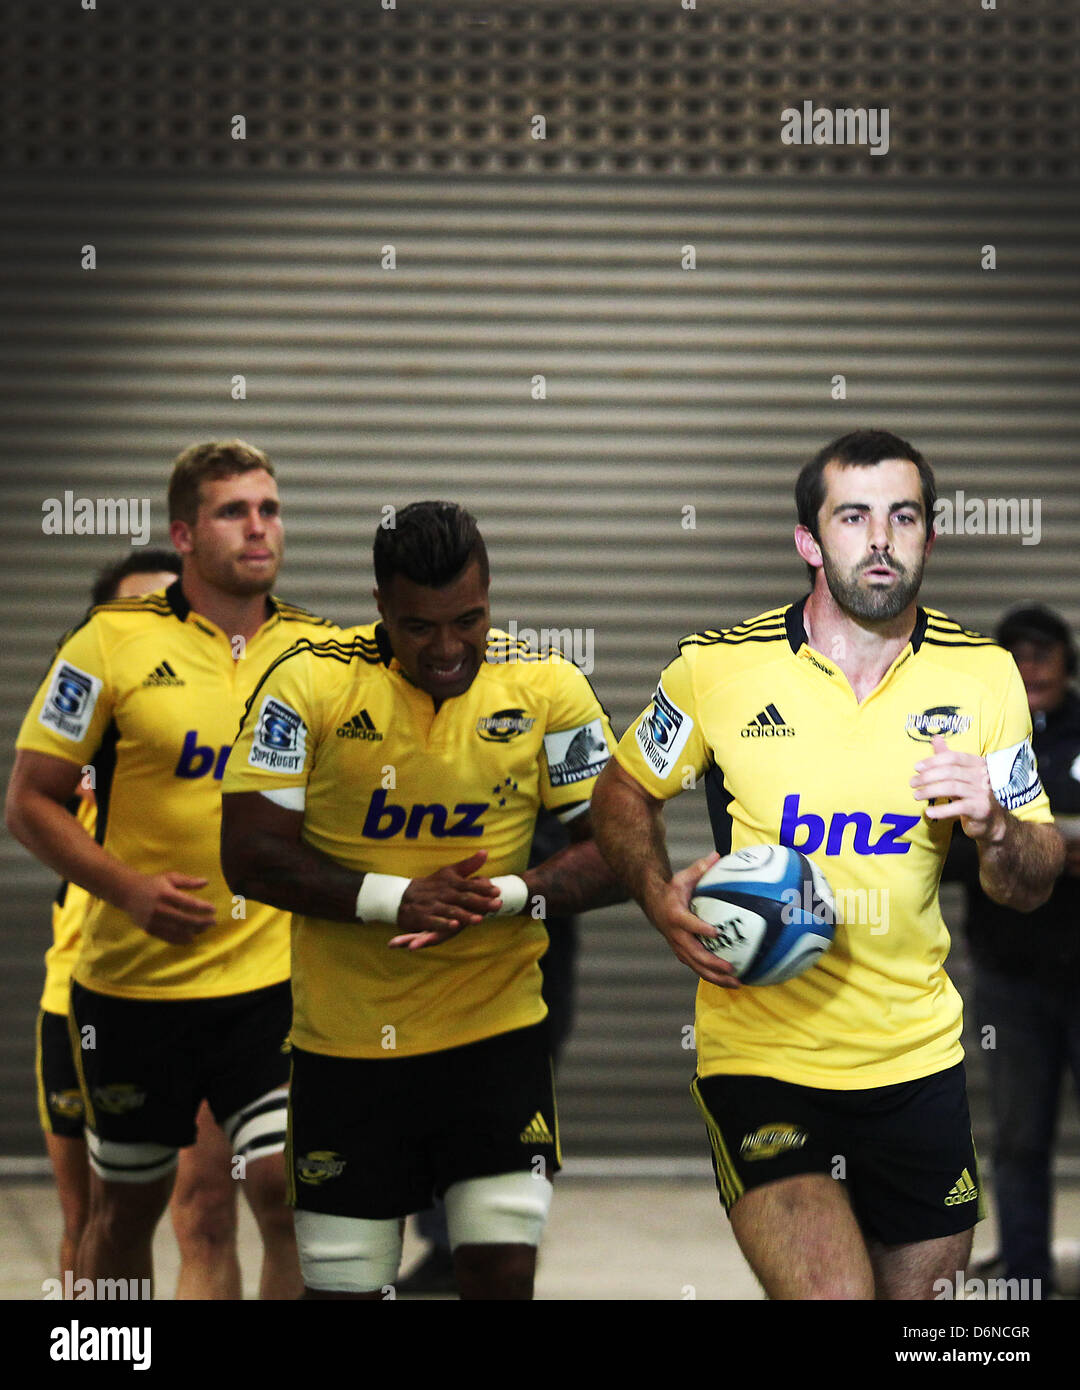 19.04.2013. Wellington, Nuova Zelanda. Uragani' Conrad Smith conduce fuori il suo team. Investec Super Rugby, uragani versus vigore al Westpac Stadium di Wellington, Nuova Zelanda. Foto Stock